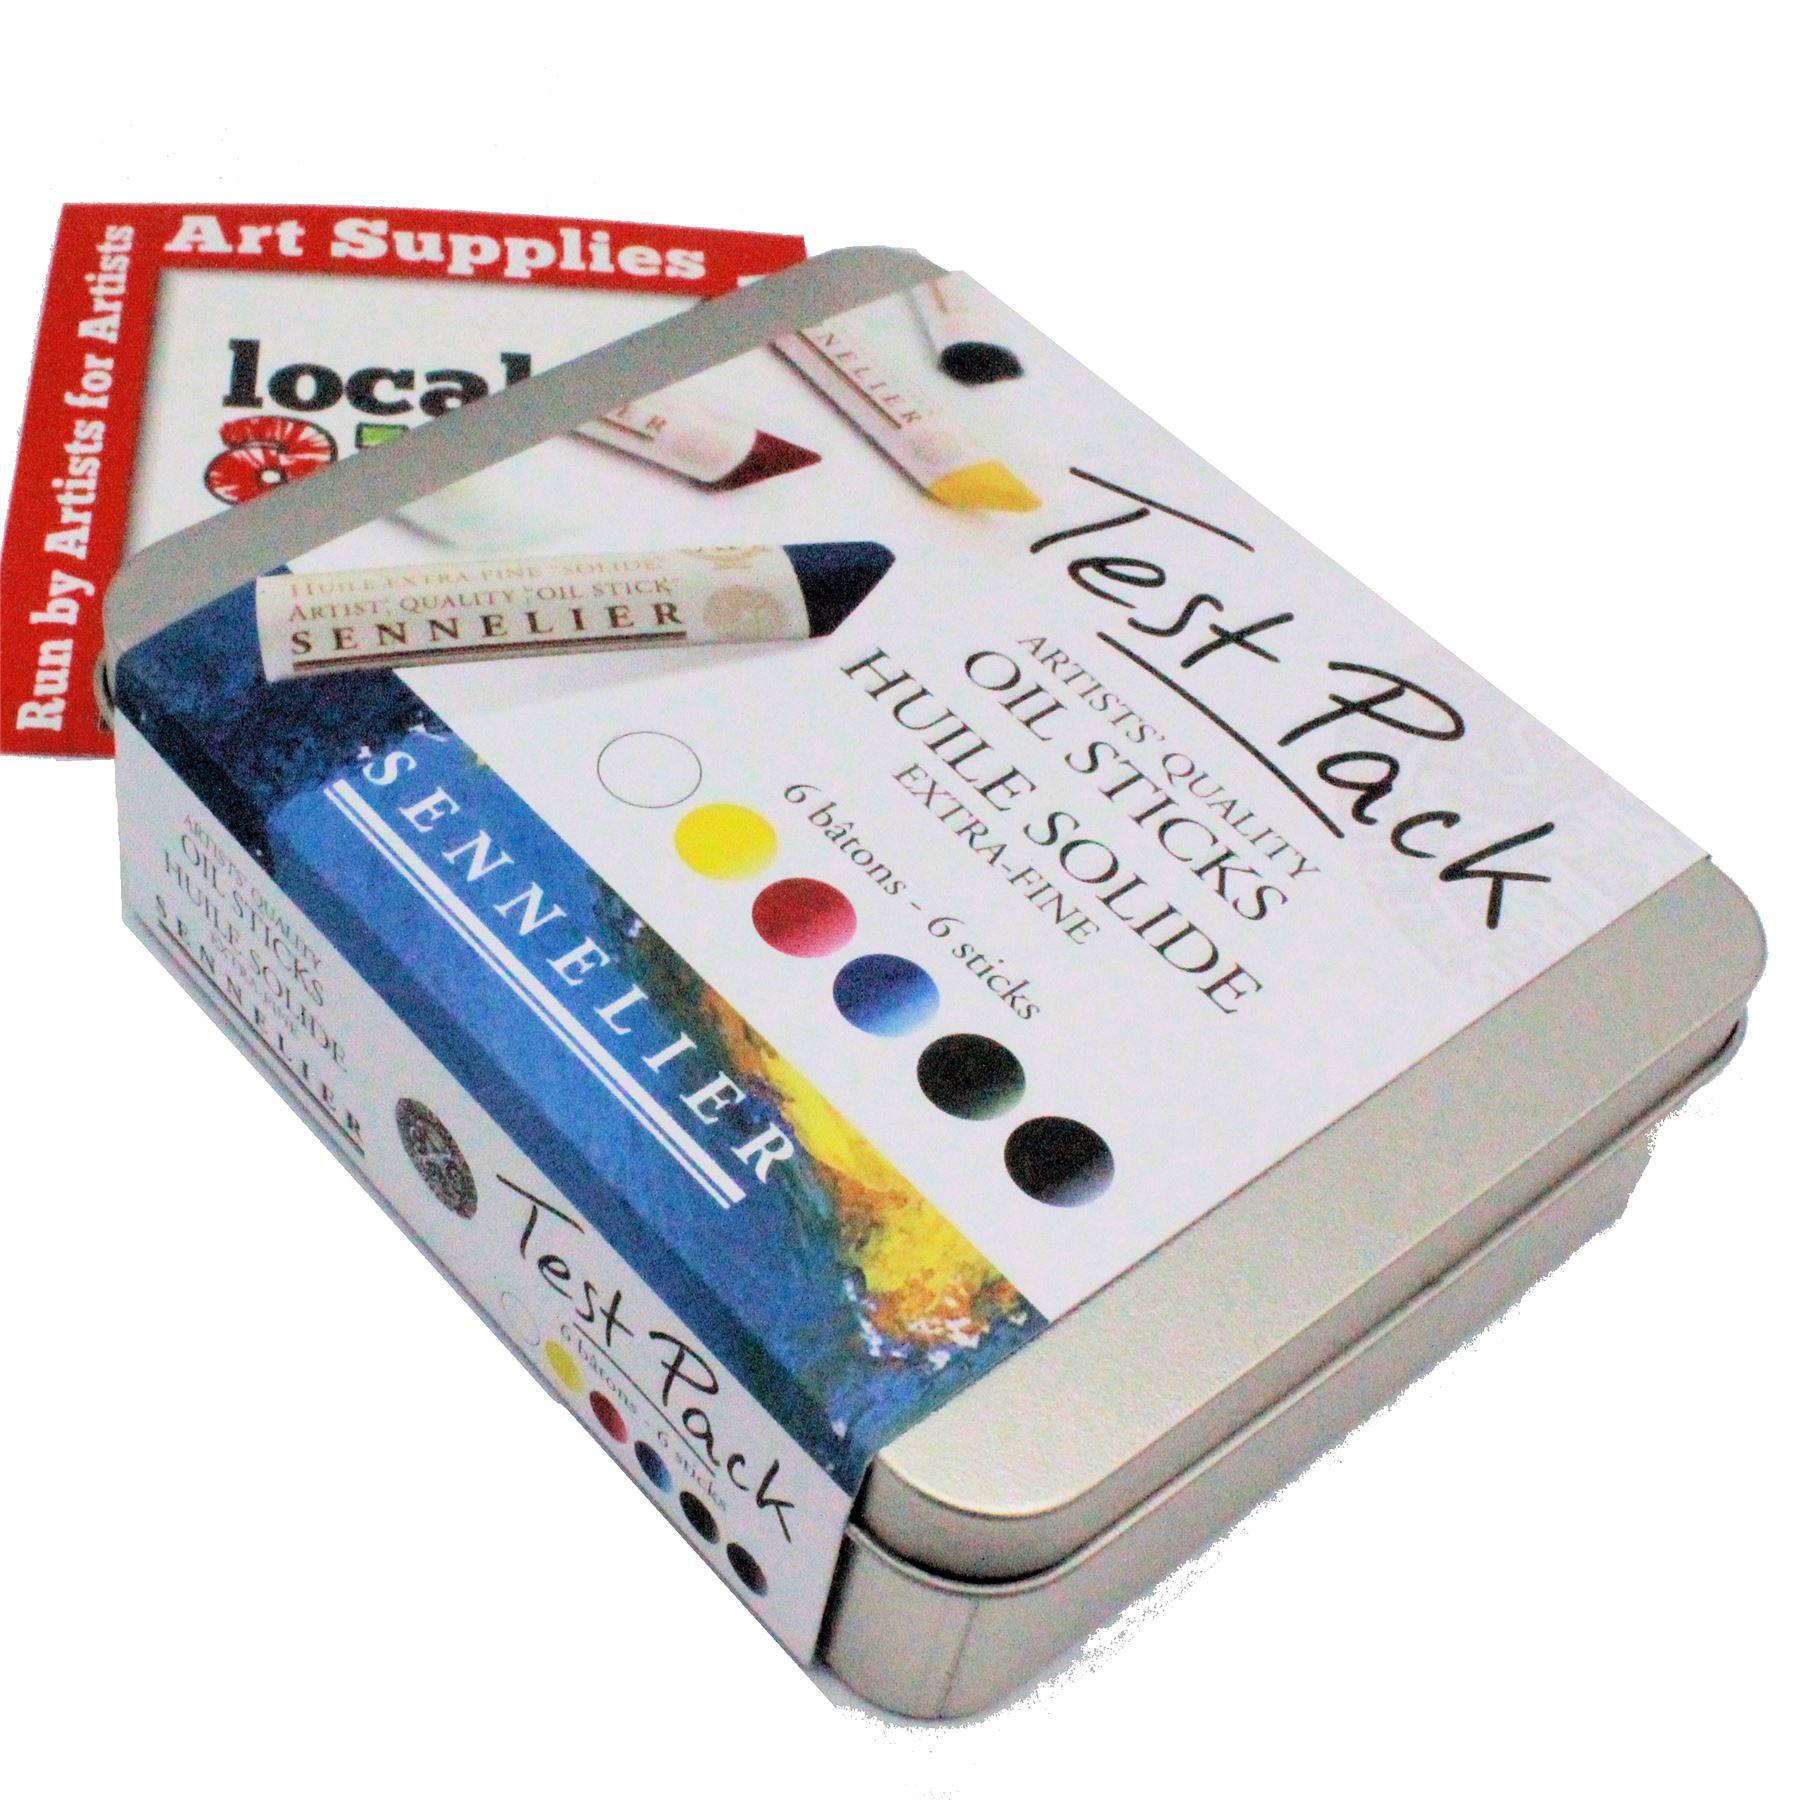 6 colours of Sennelier oil sticks. Metal test pack